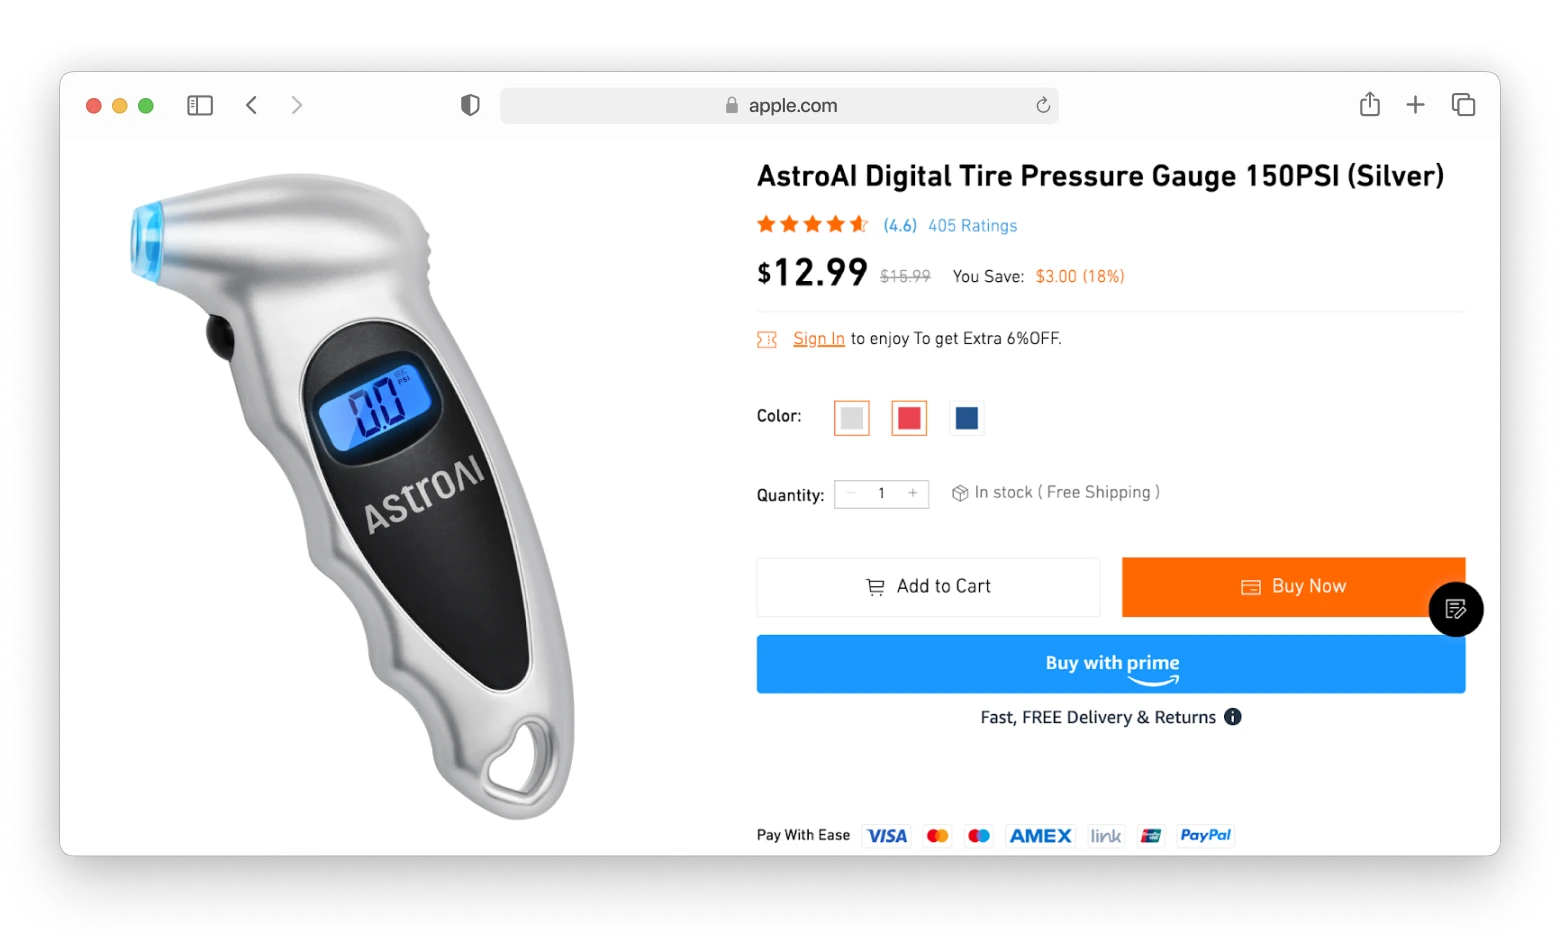 Digital tire pressure gauge by astroai.com